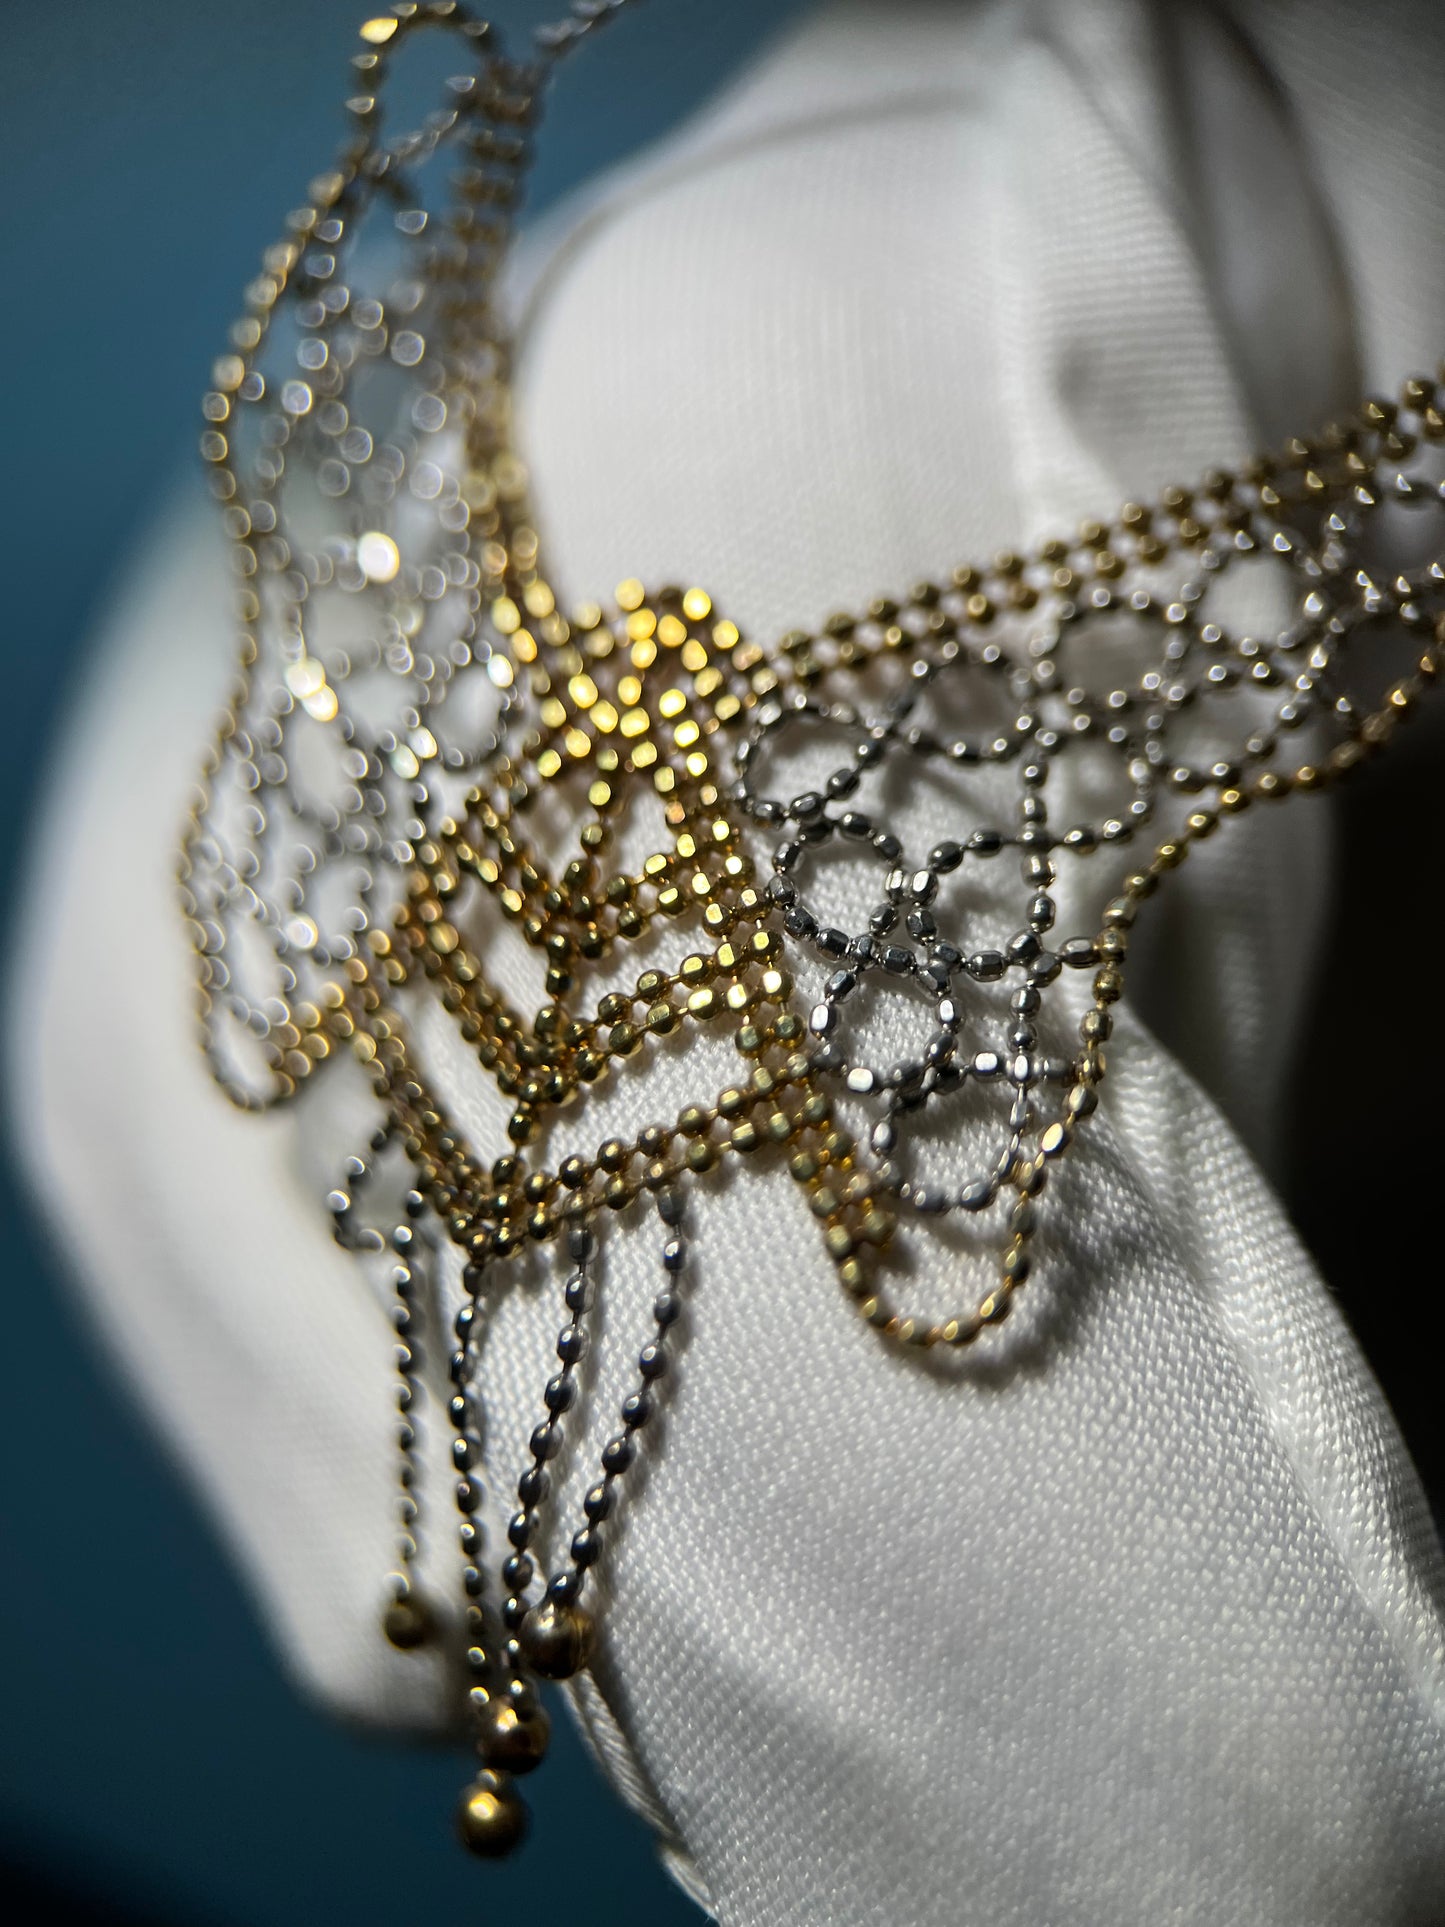 Gossamer-Winged Butterfly Necklace in 10k Gold & .925 Silver 17”